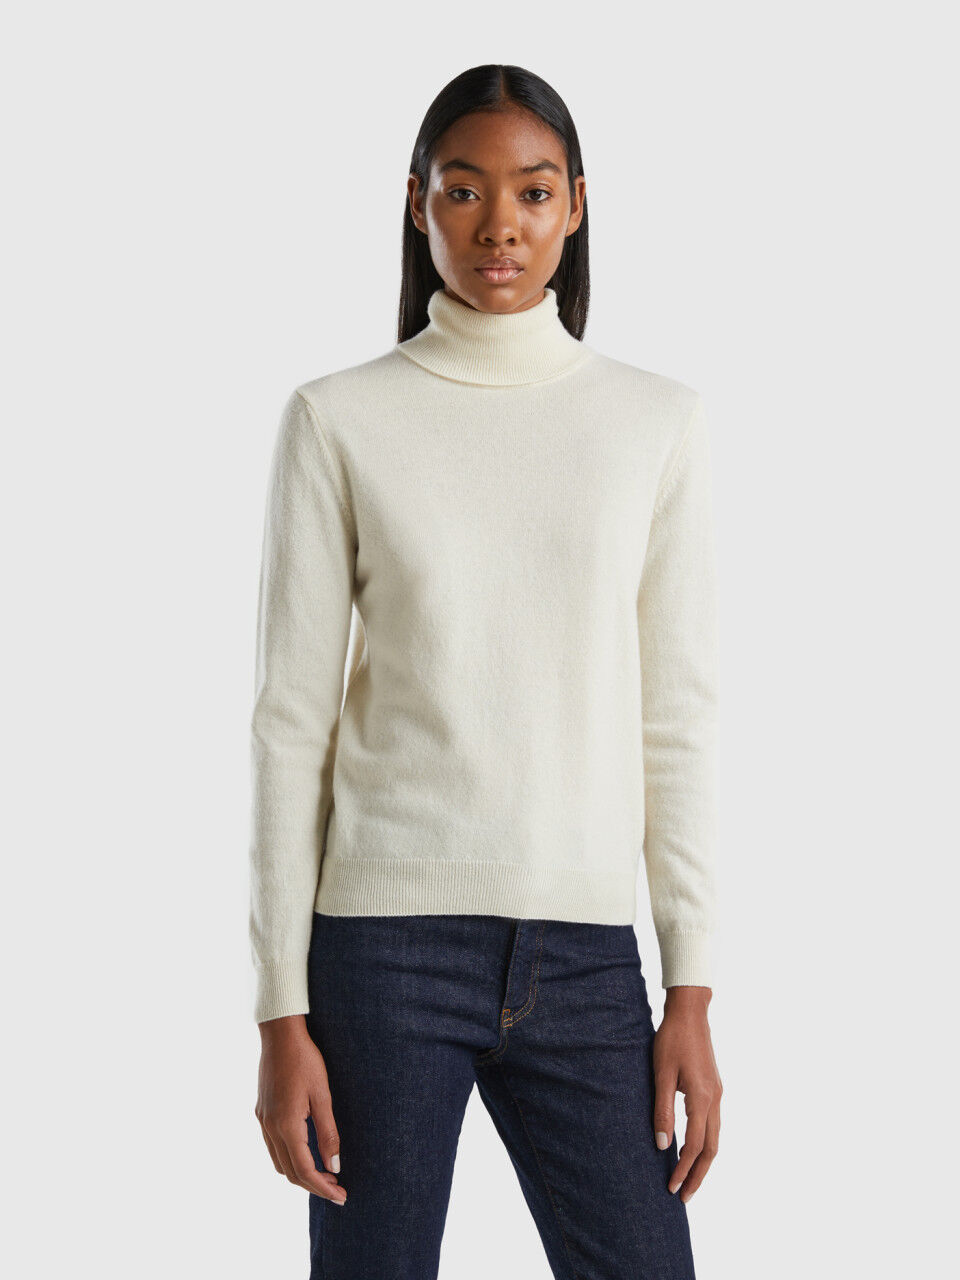 Cream turtleneck sweater in pure Merino wool